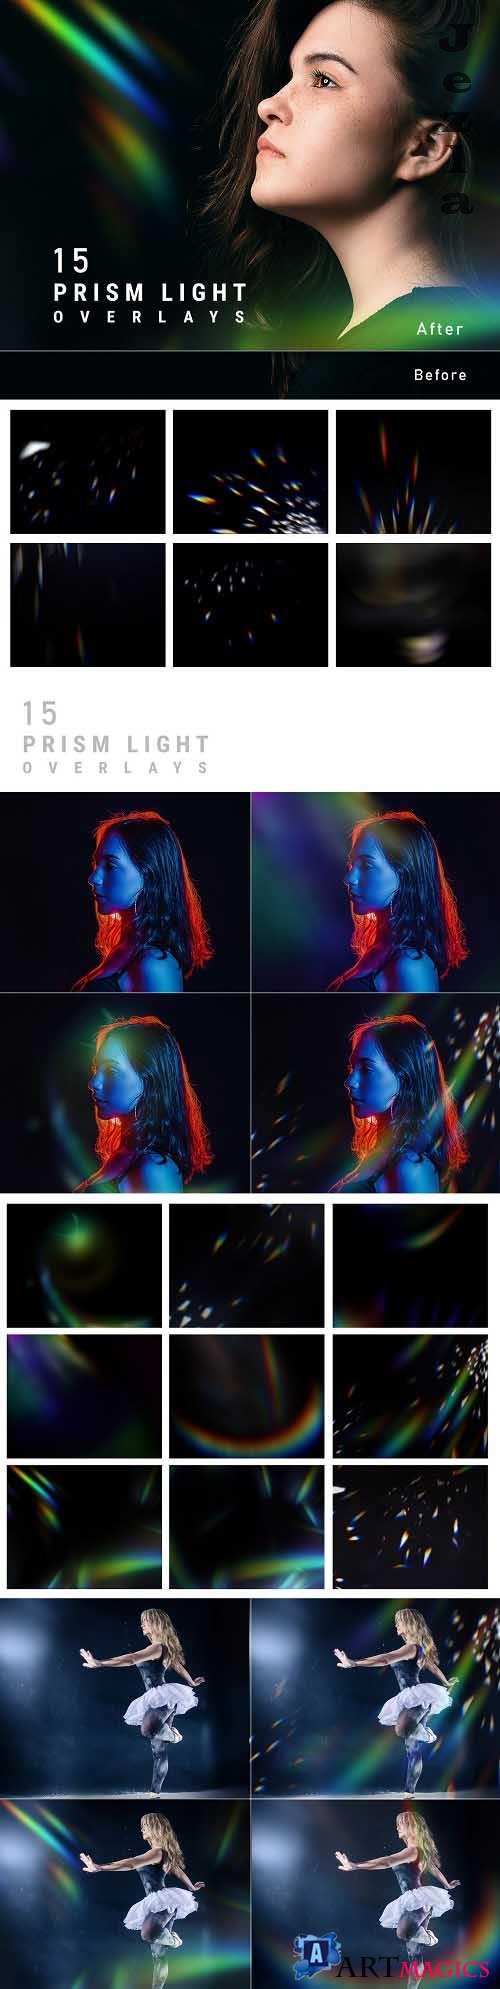 15 Prism Light Overlays, Glow light overlays, colorful Light background